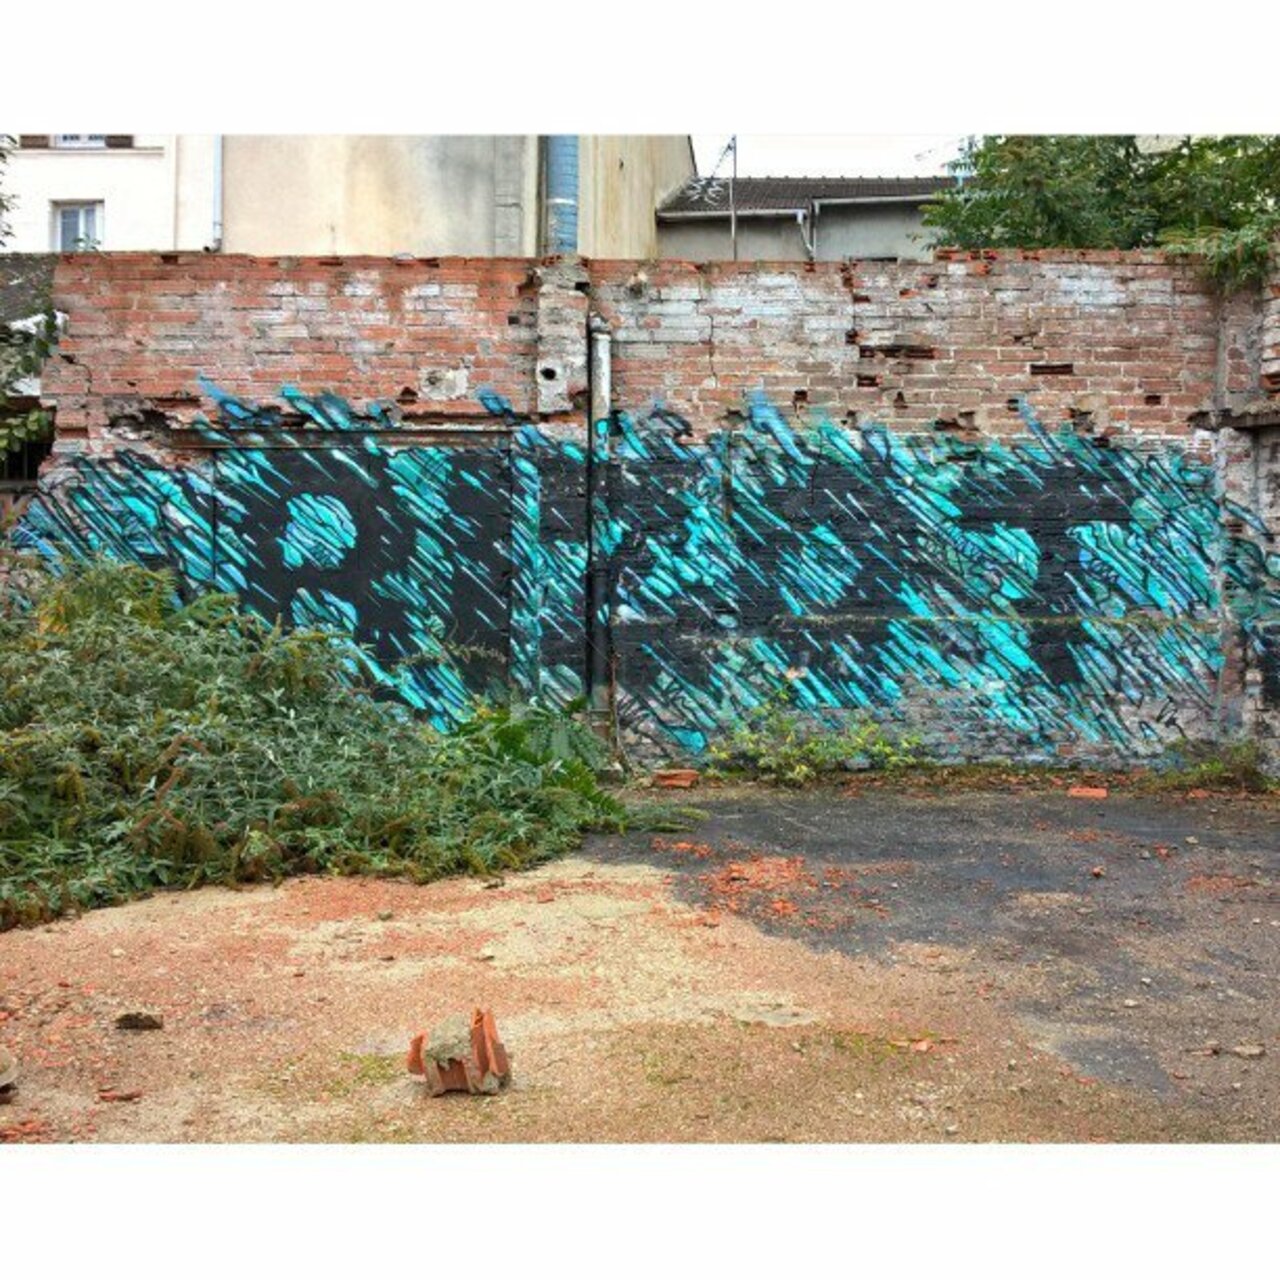 RIZOT
#PALcrew #PeaceAndLoveCrew #streetart #graffiti #graff #art #fatcap #bombing #sprayart #spraycanart #wallart … https://t.co/v71QU7nVO0